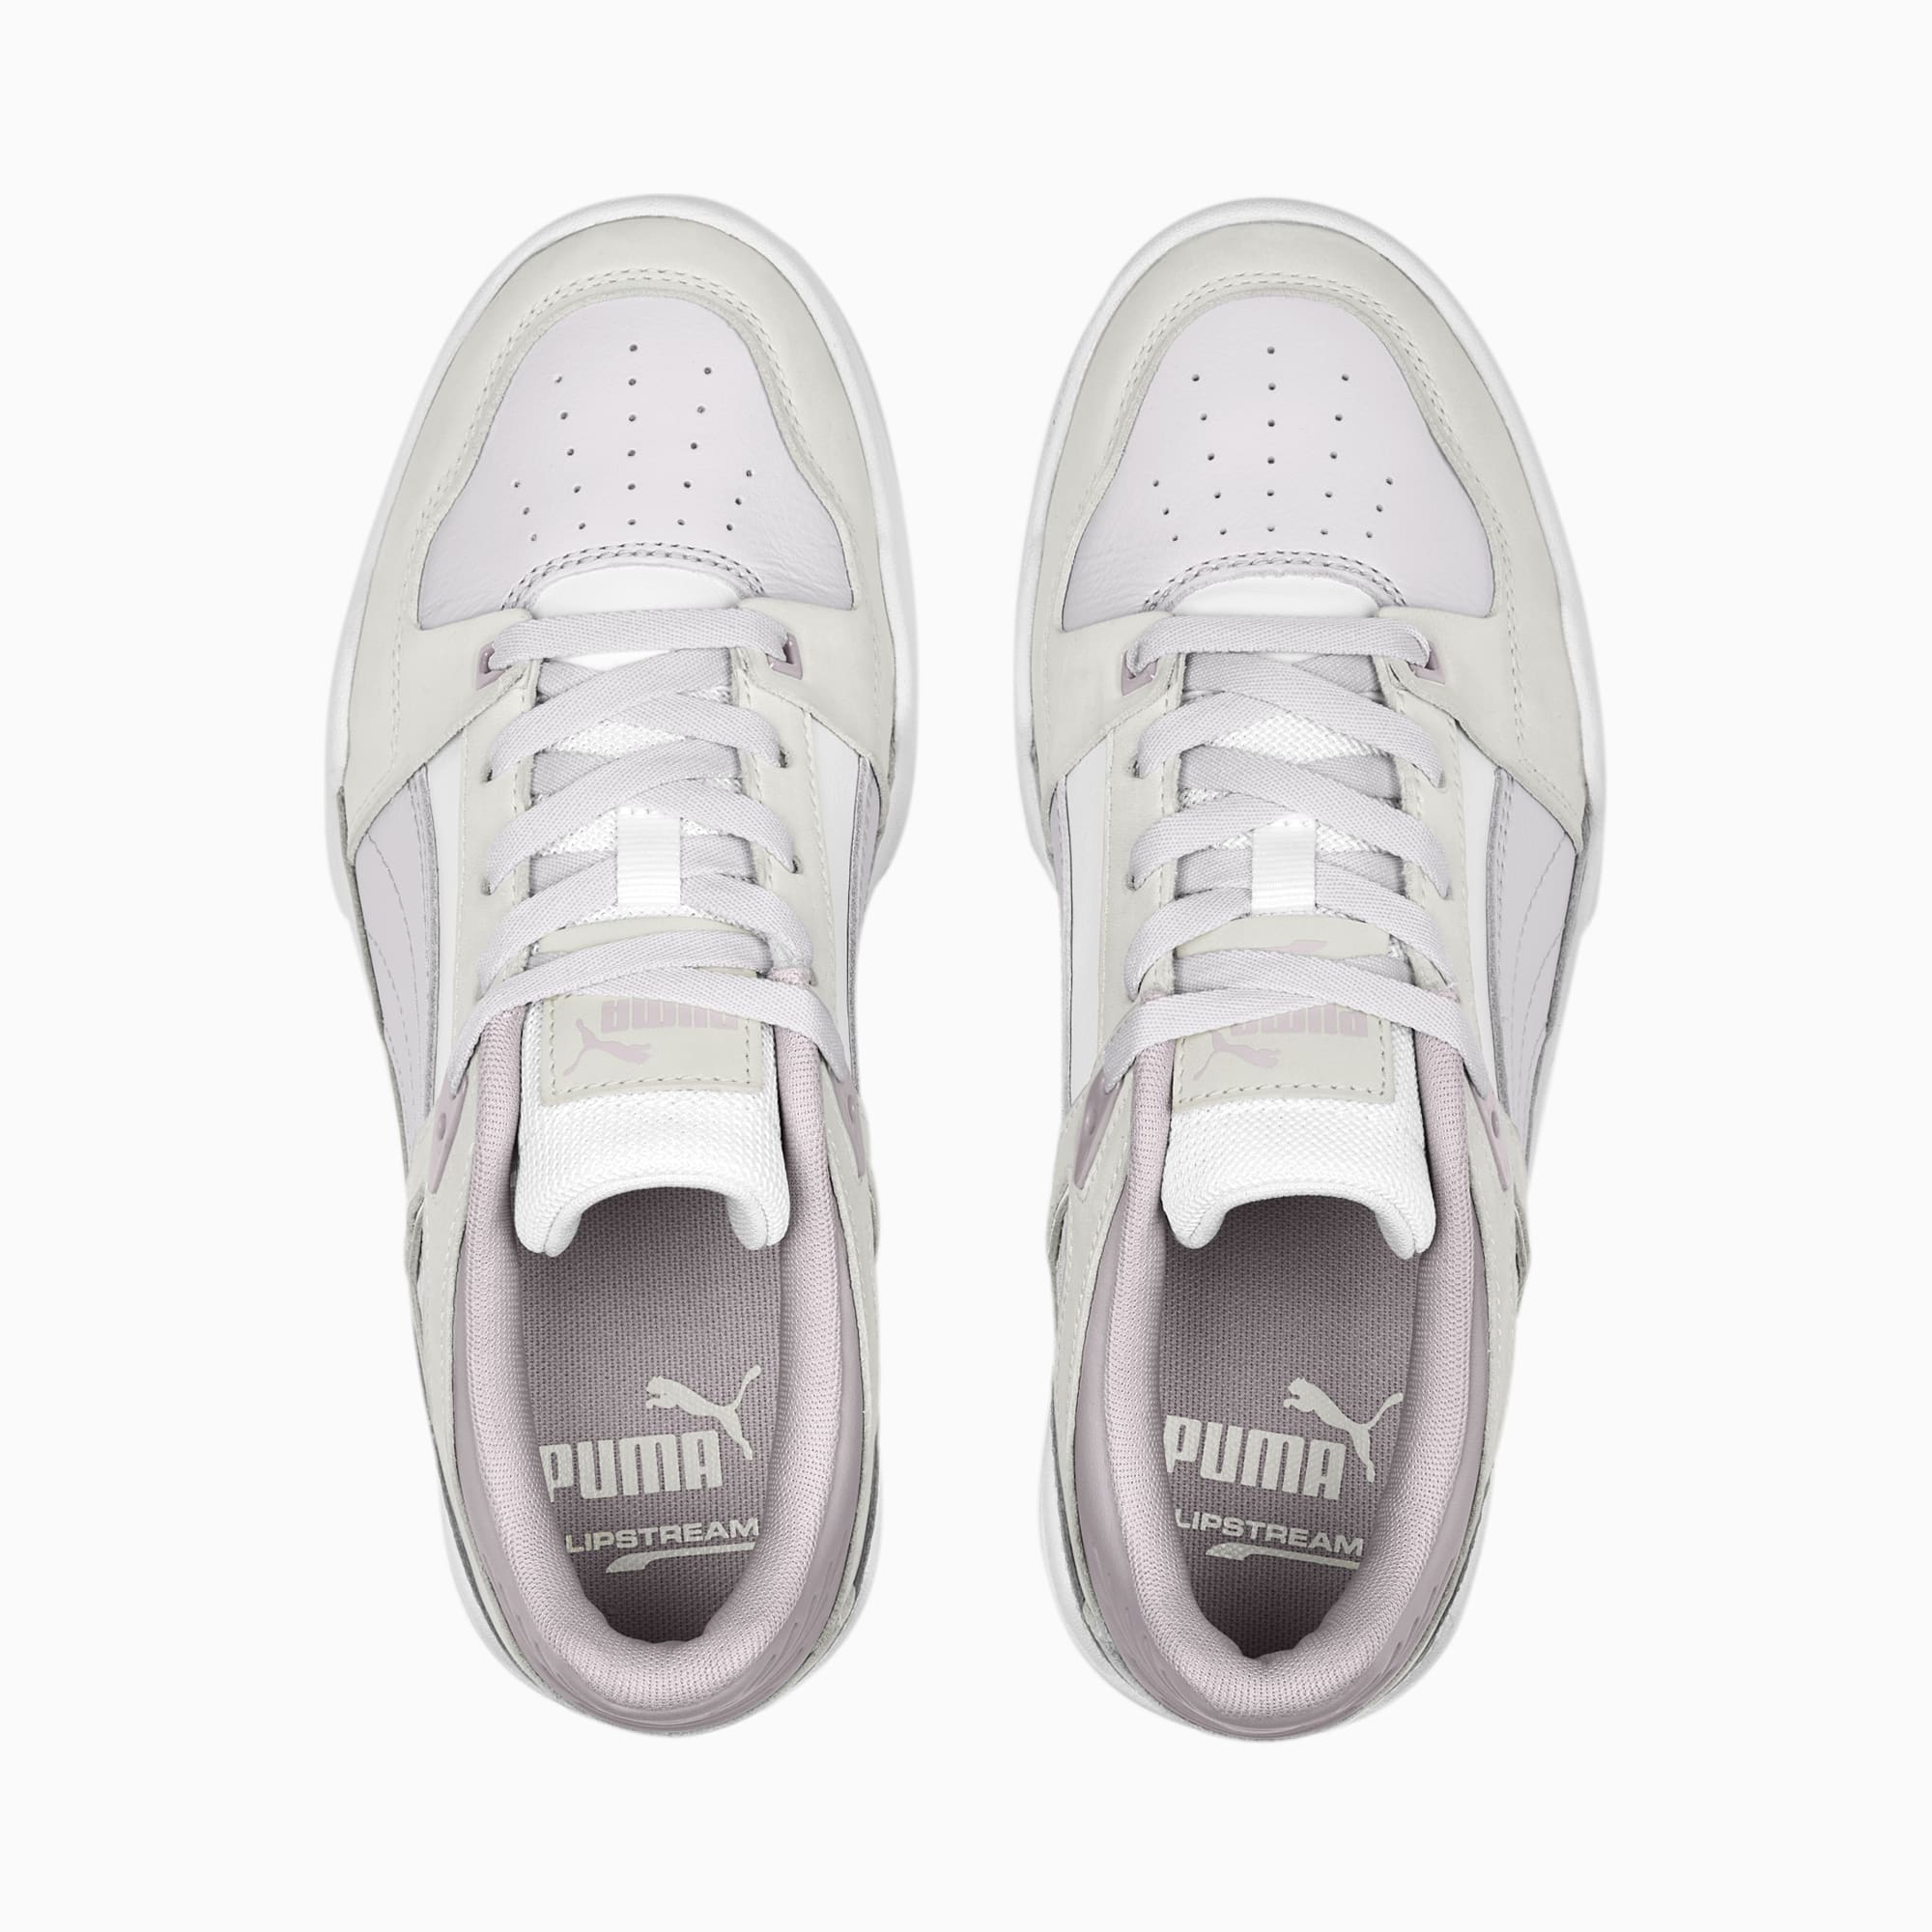 PUMA Chaussure Sneakers Slipstream PRM Femme, Blanc/Gris